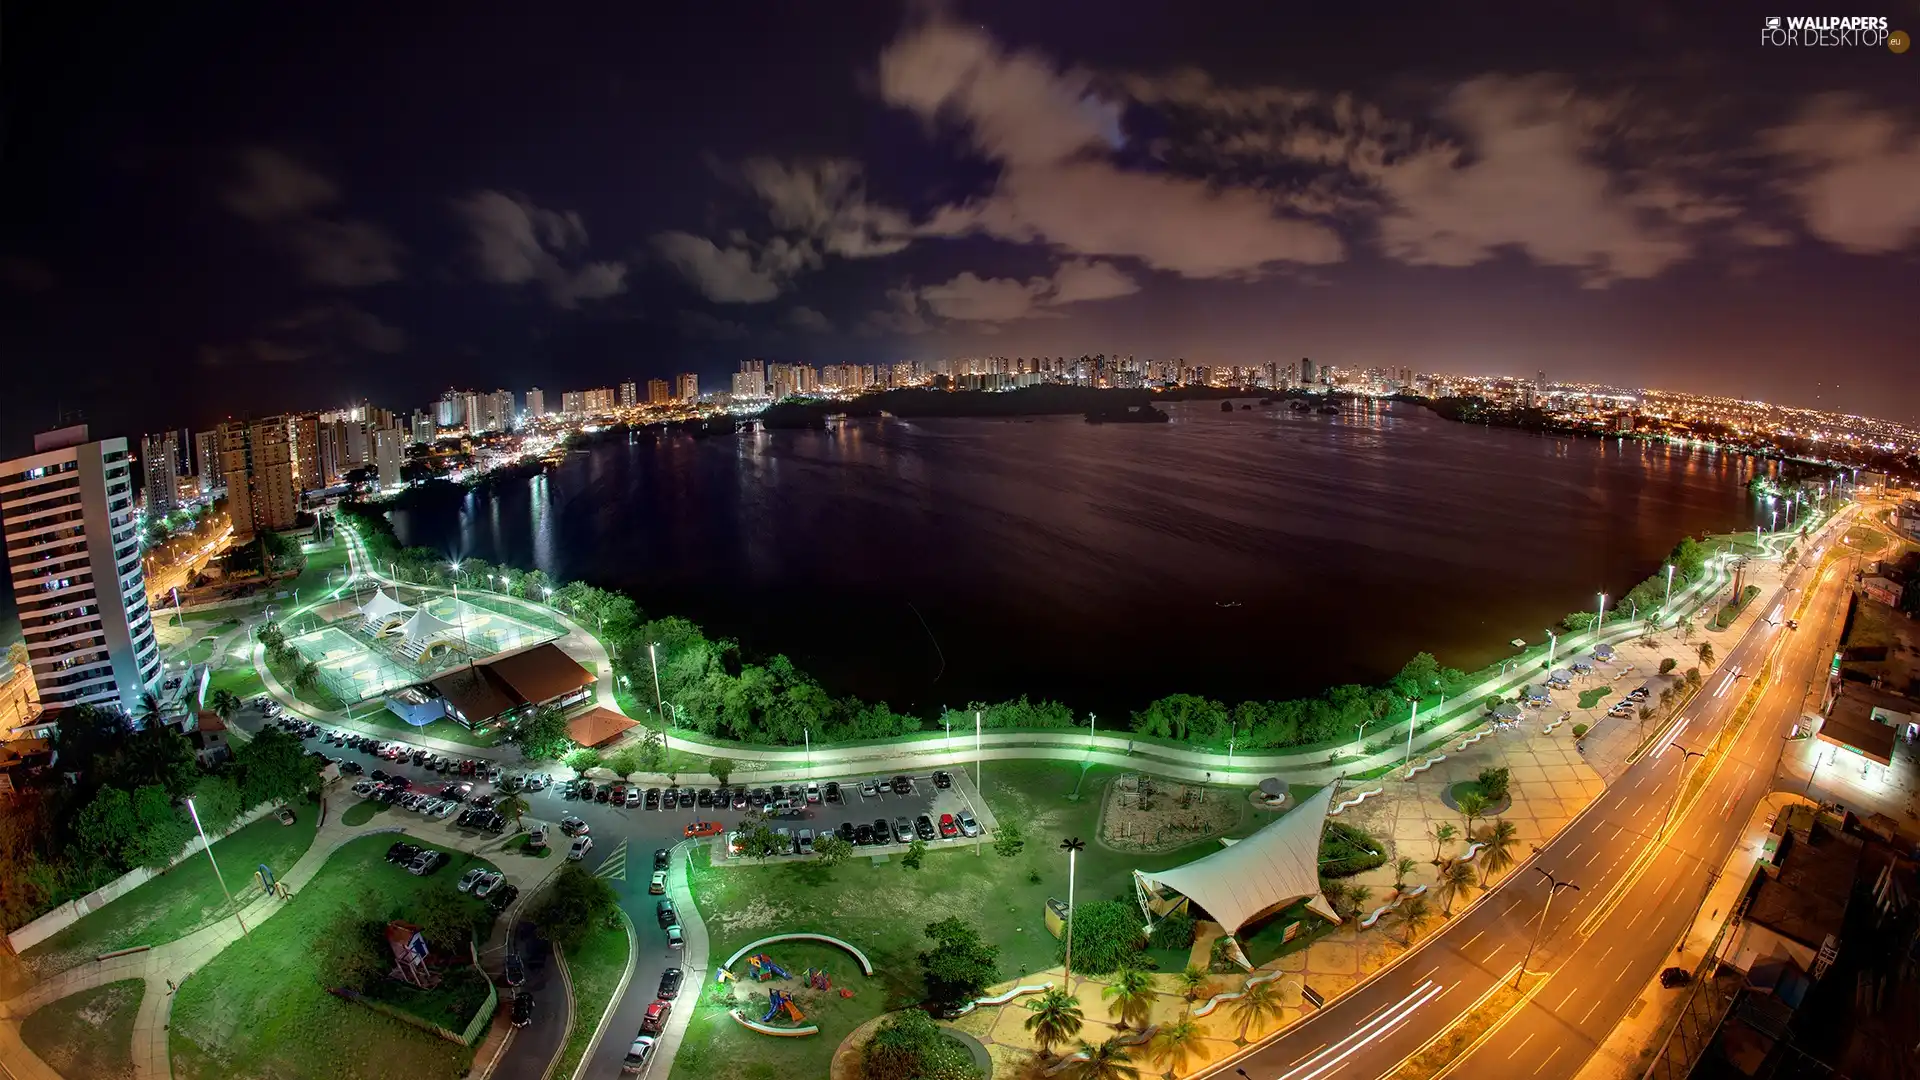 Brazil, City at Night, Park